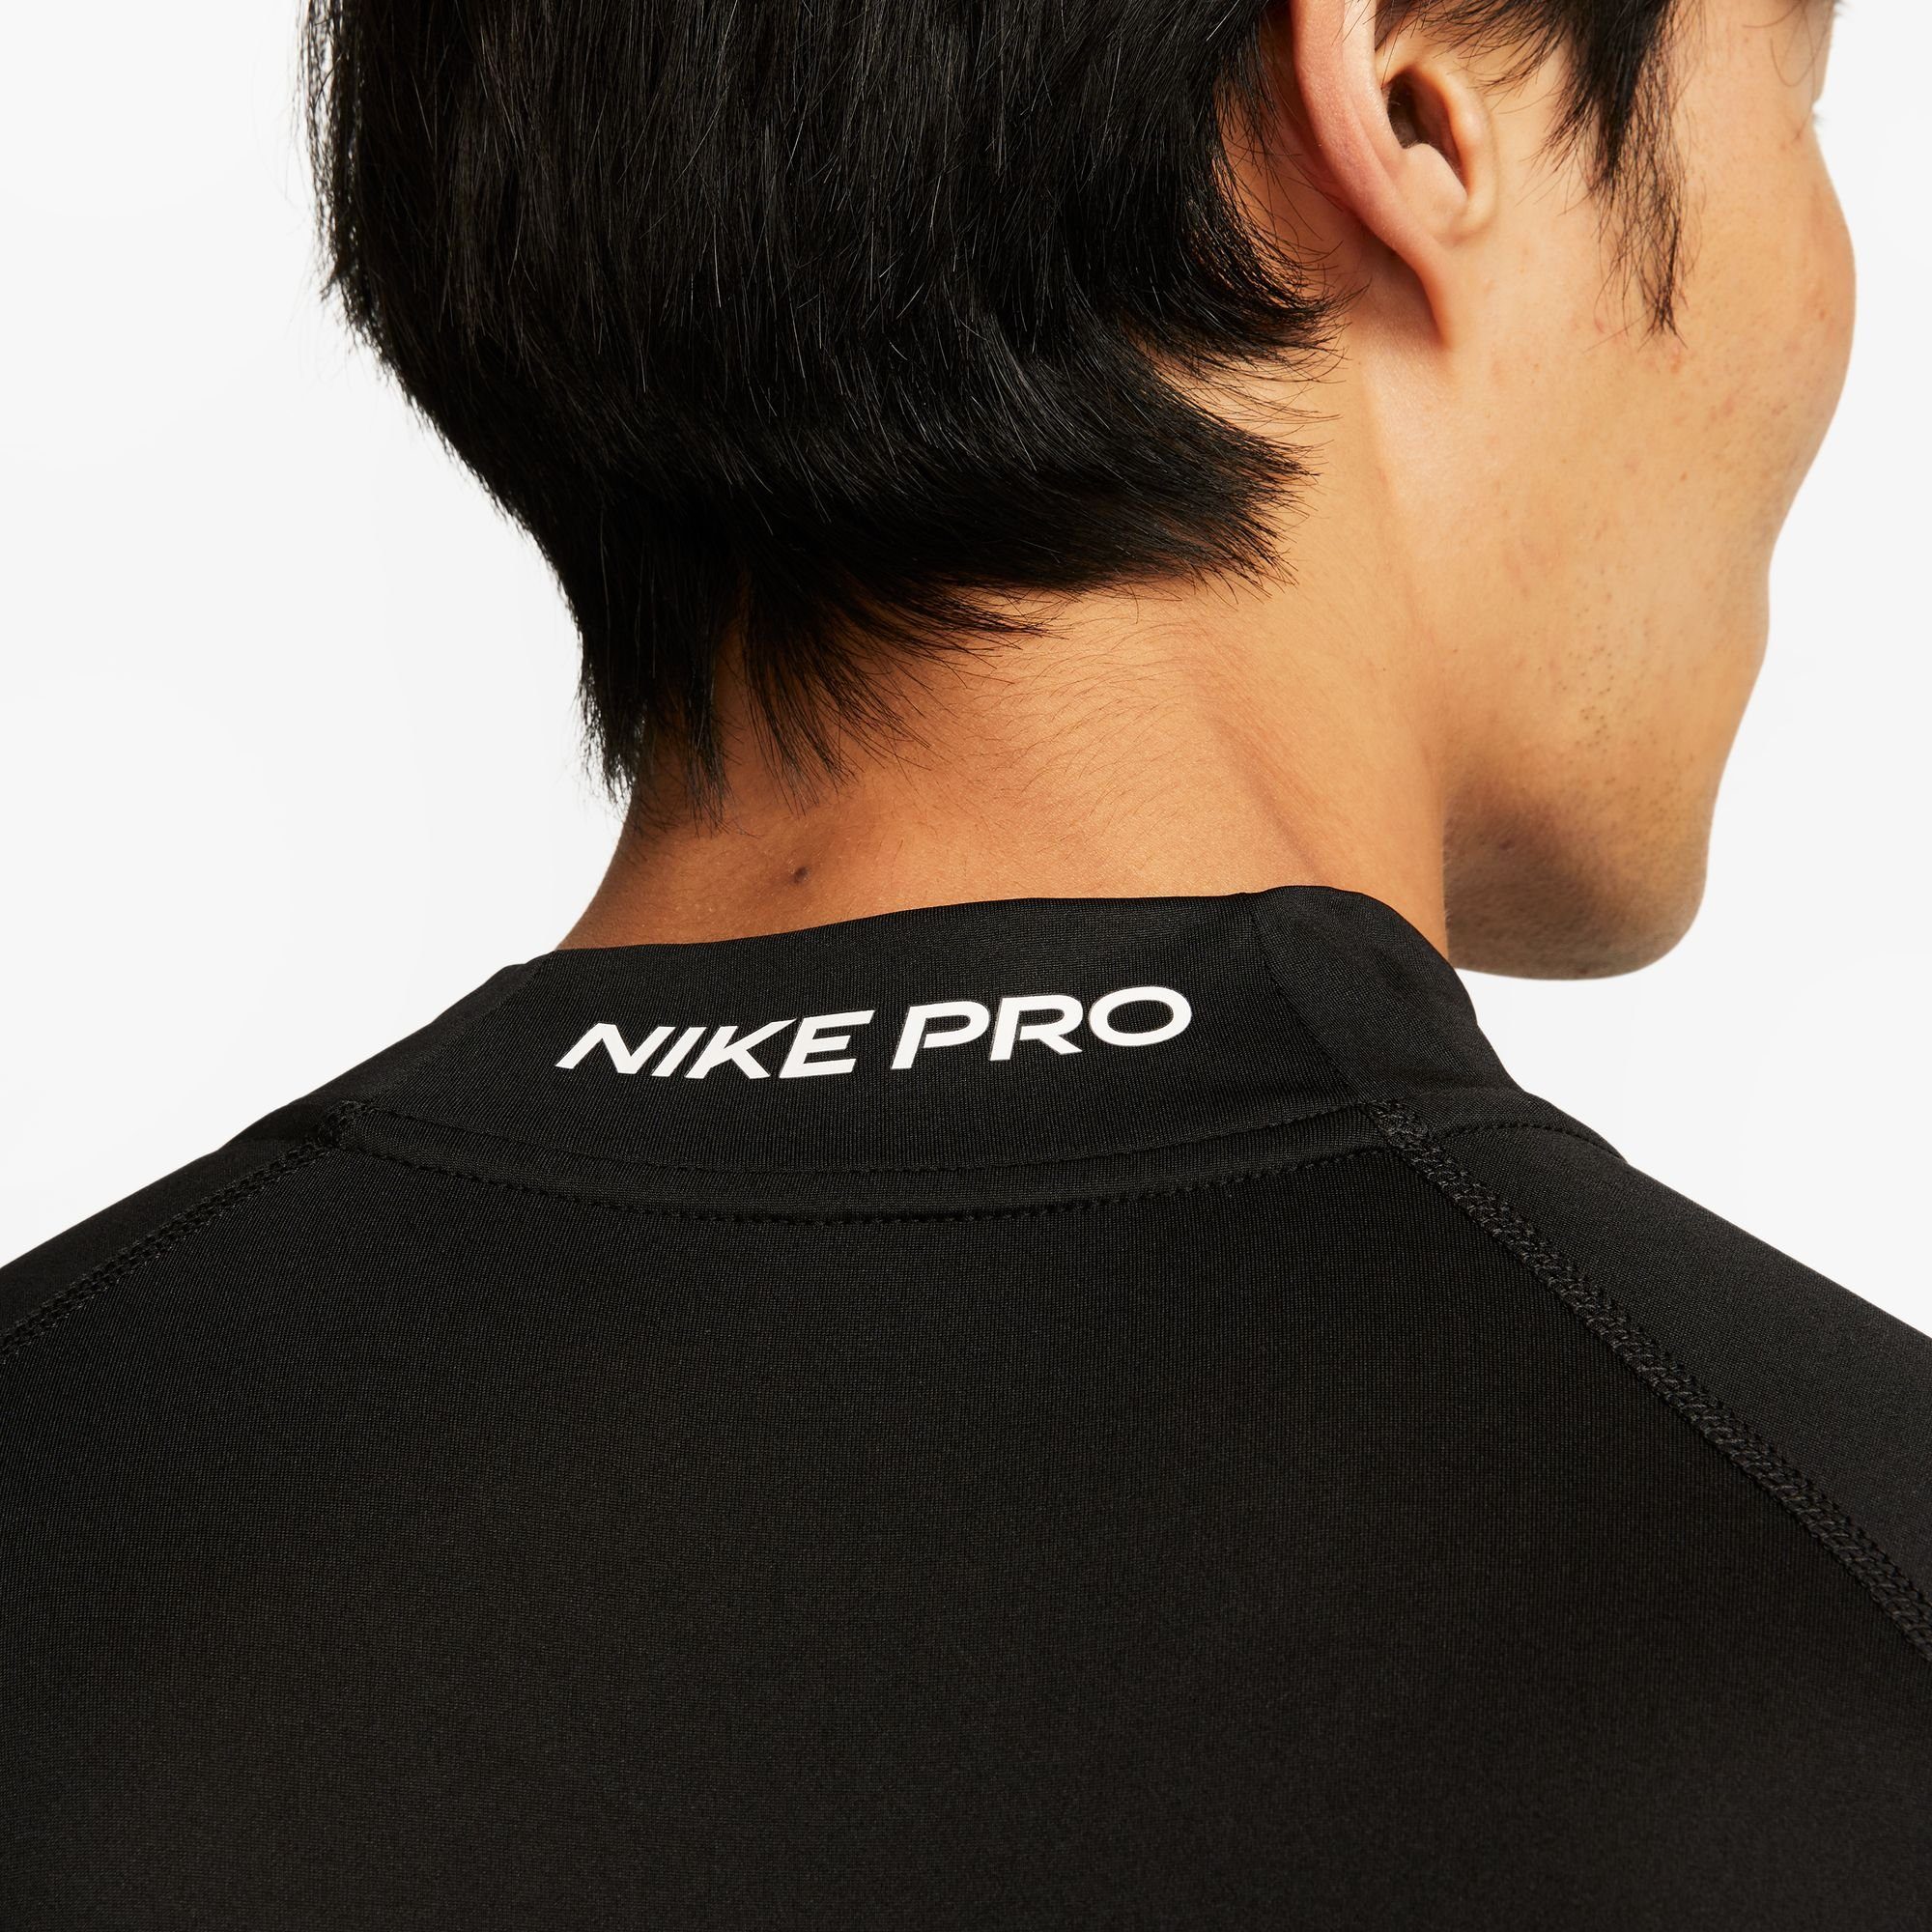 Nike Trainingsshirt MEN'S MOCK-NECK TOP DRI-FIT LONG-SLEEVE PRO TIGHT-FITTING